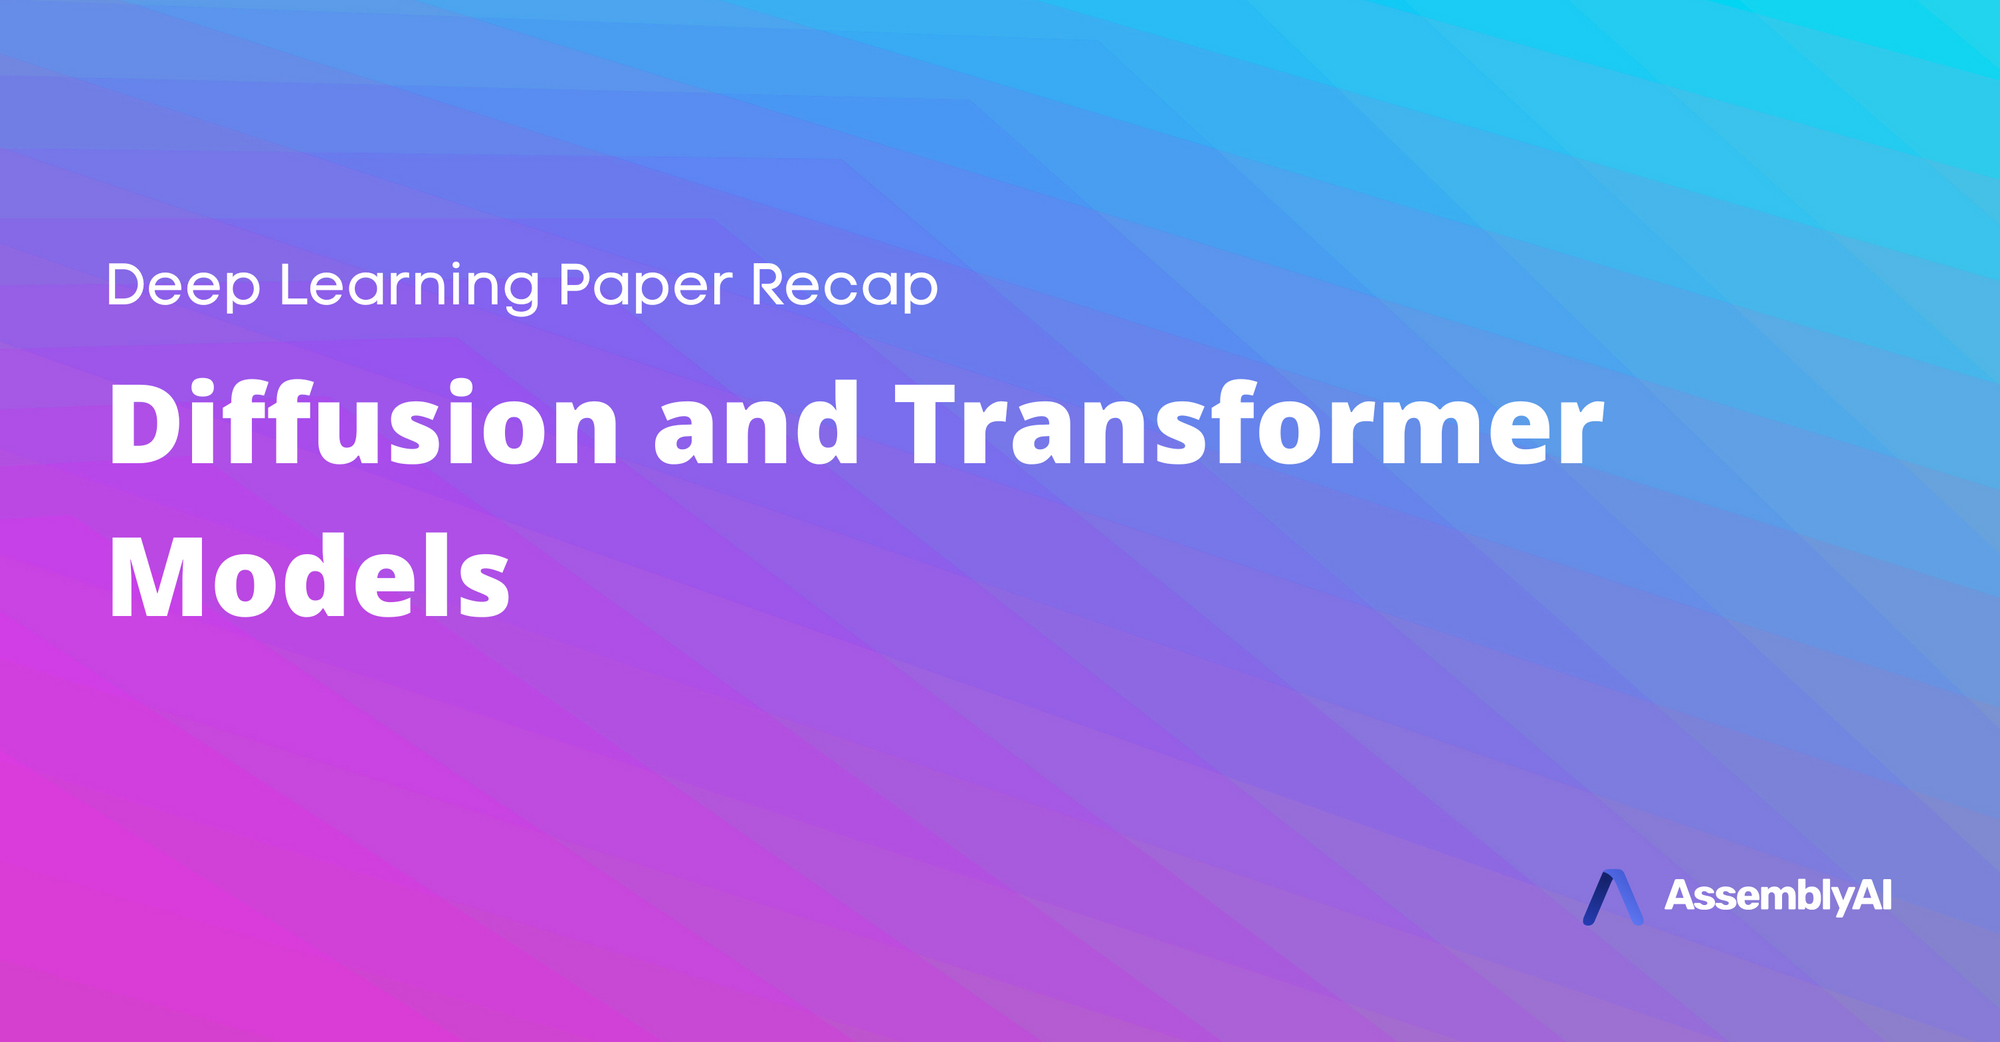 Deep Learning Paper Recap - Diffusion and Transformer Models